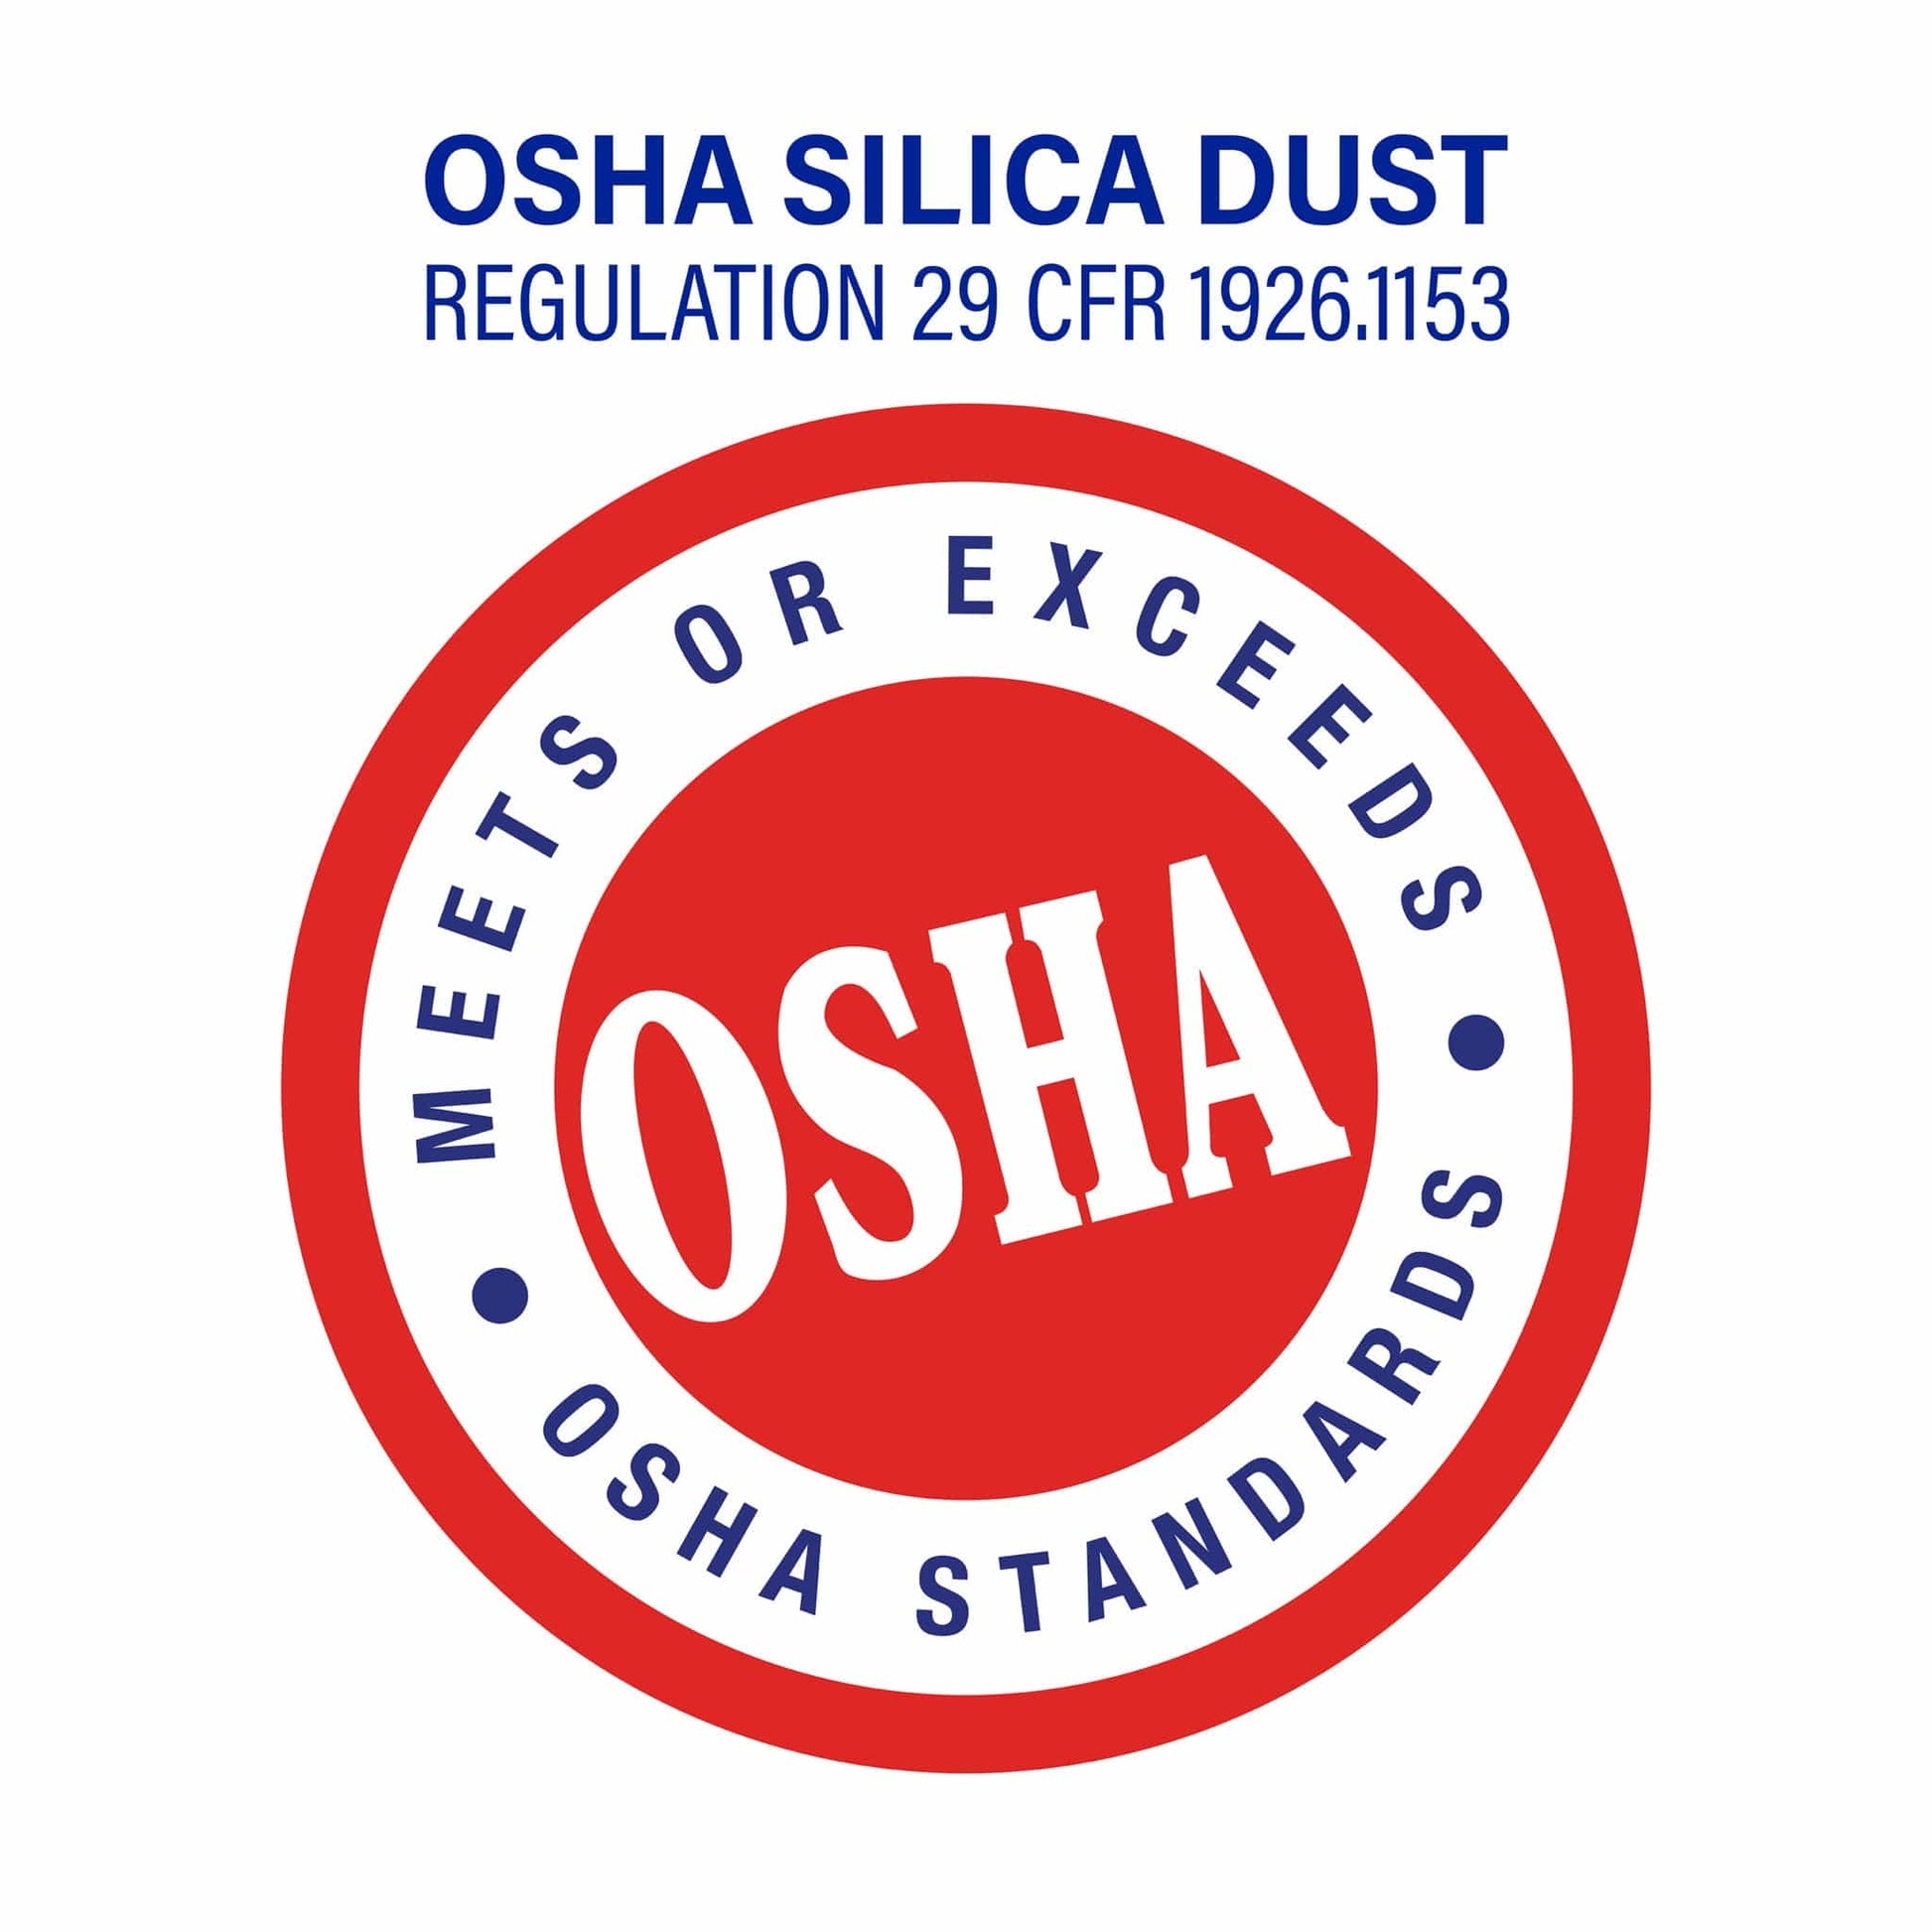 Meets or Exceeds OSHA Silica Dust Regulation 29 CFR 1926.1153